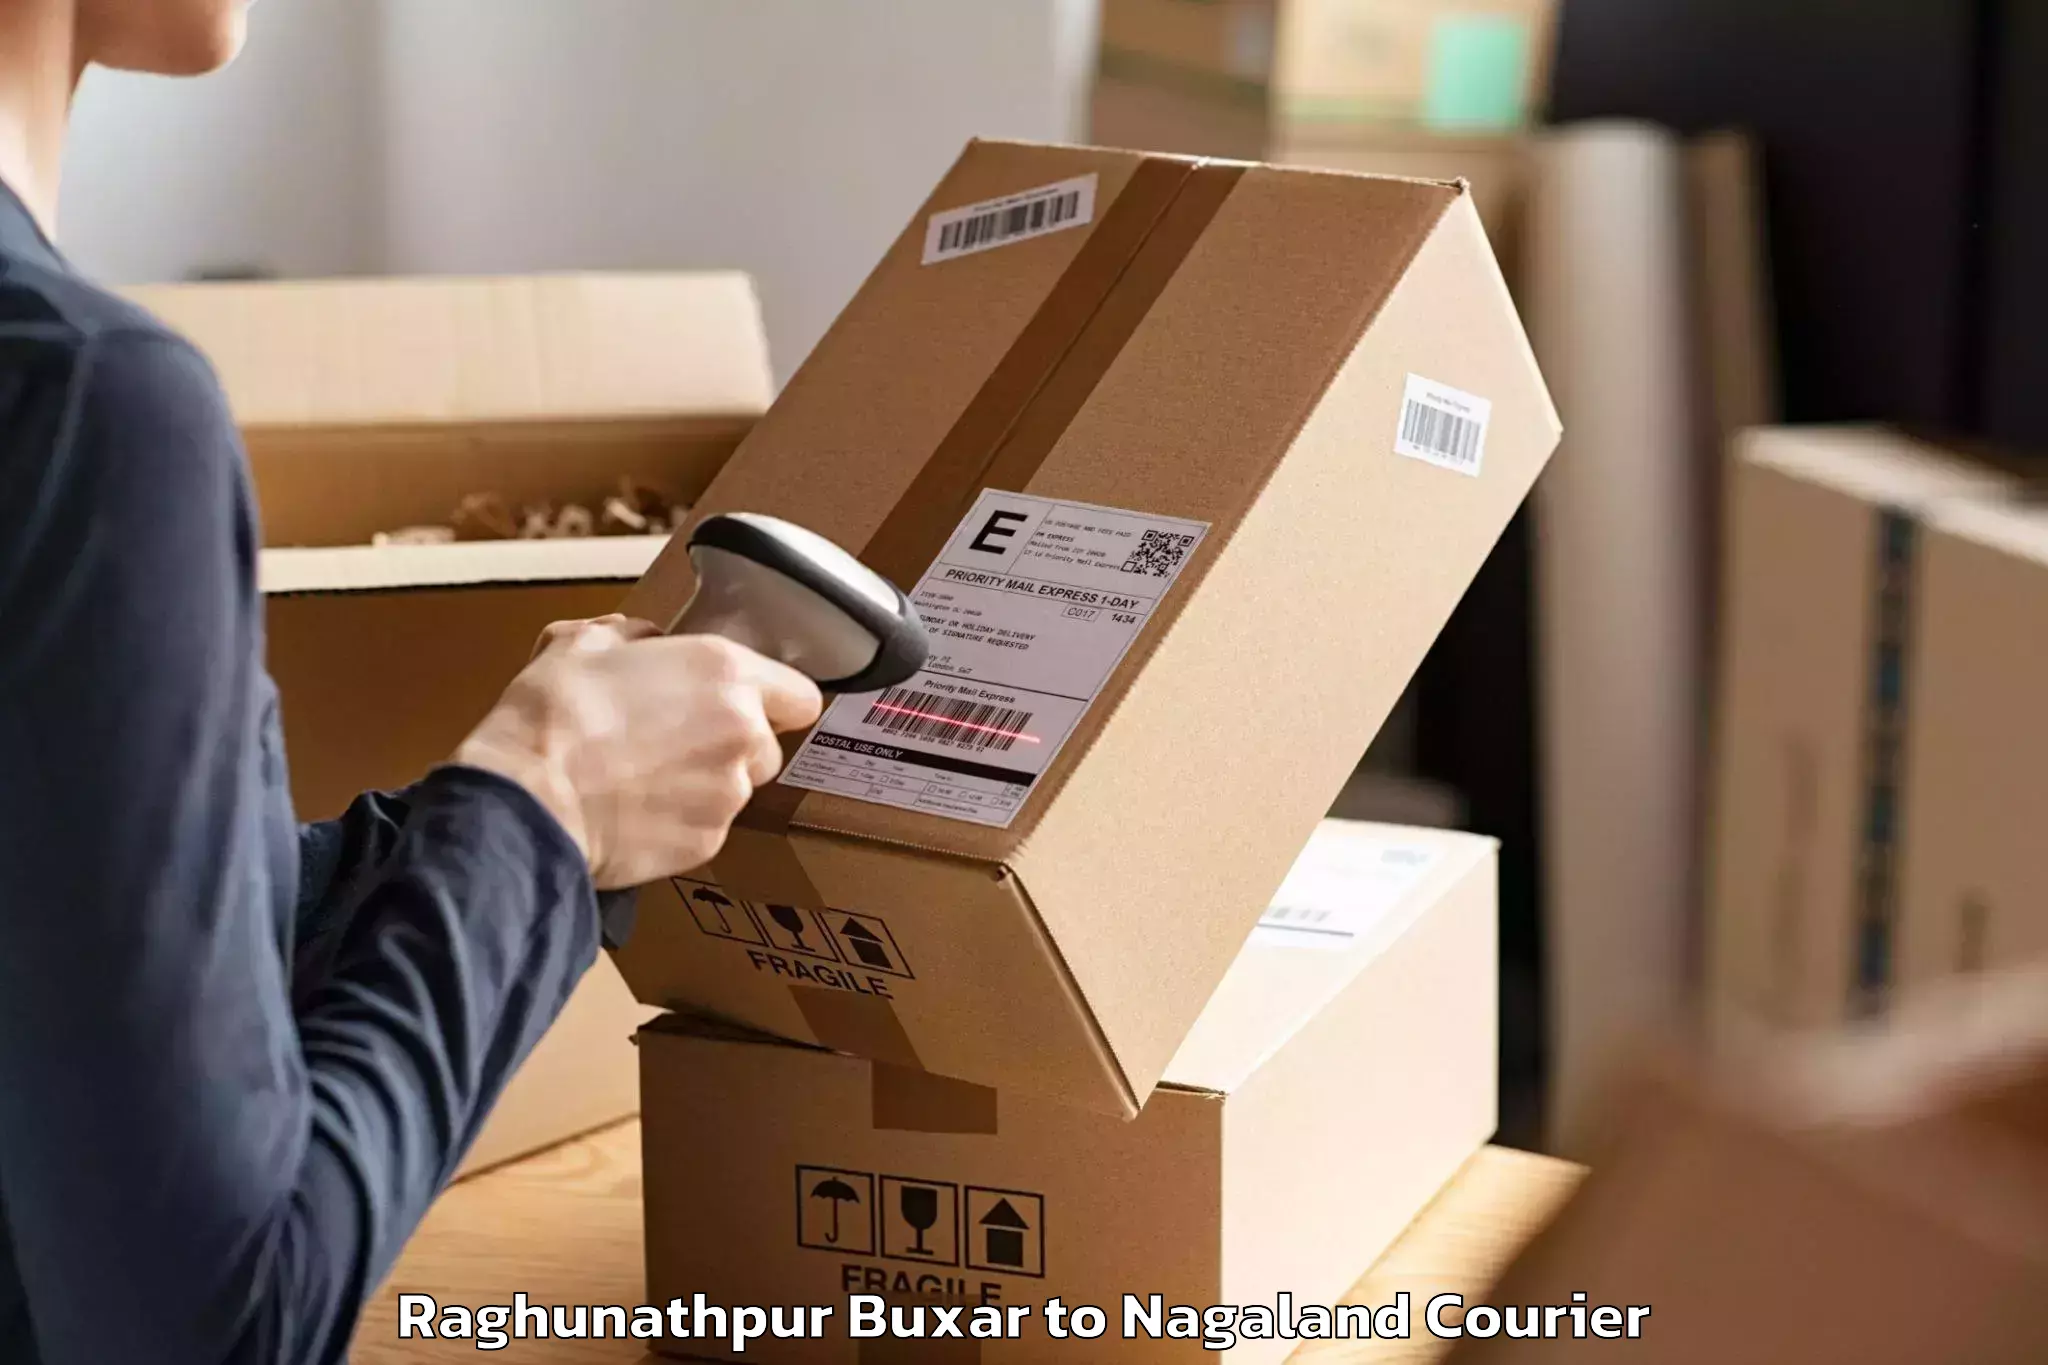 Furniture transport professionals Raghunathpur Buxar to Dimapur